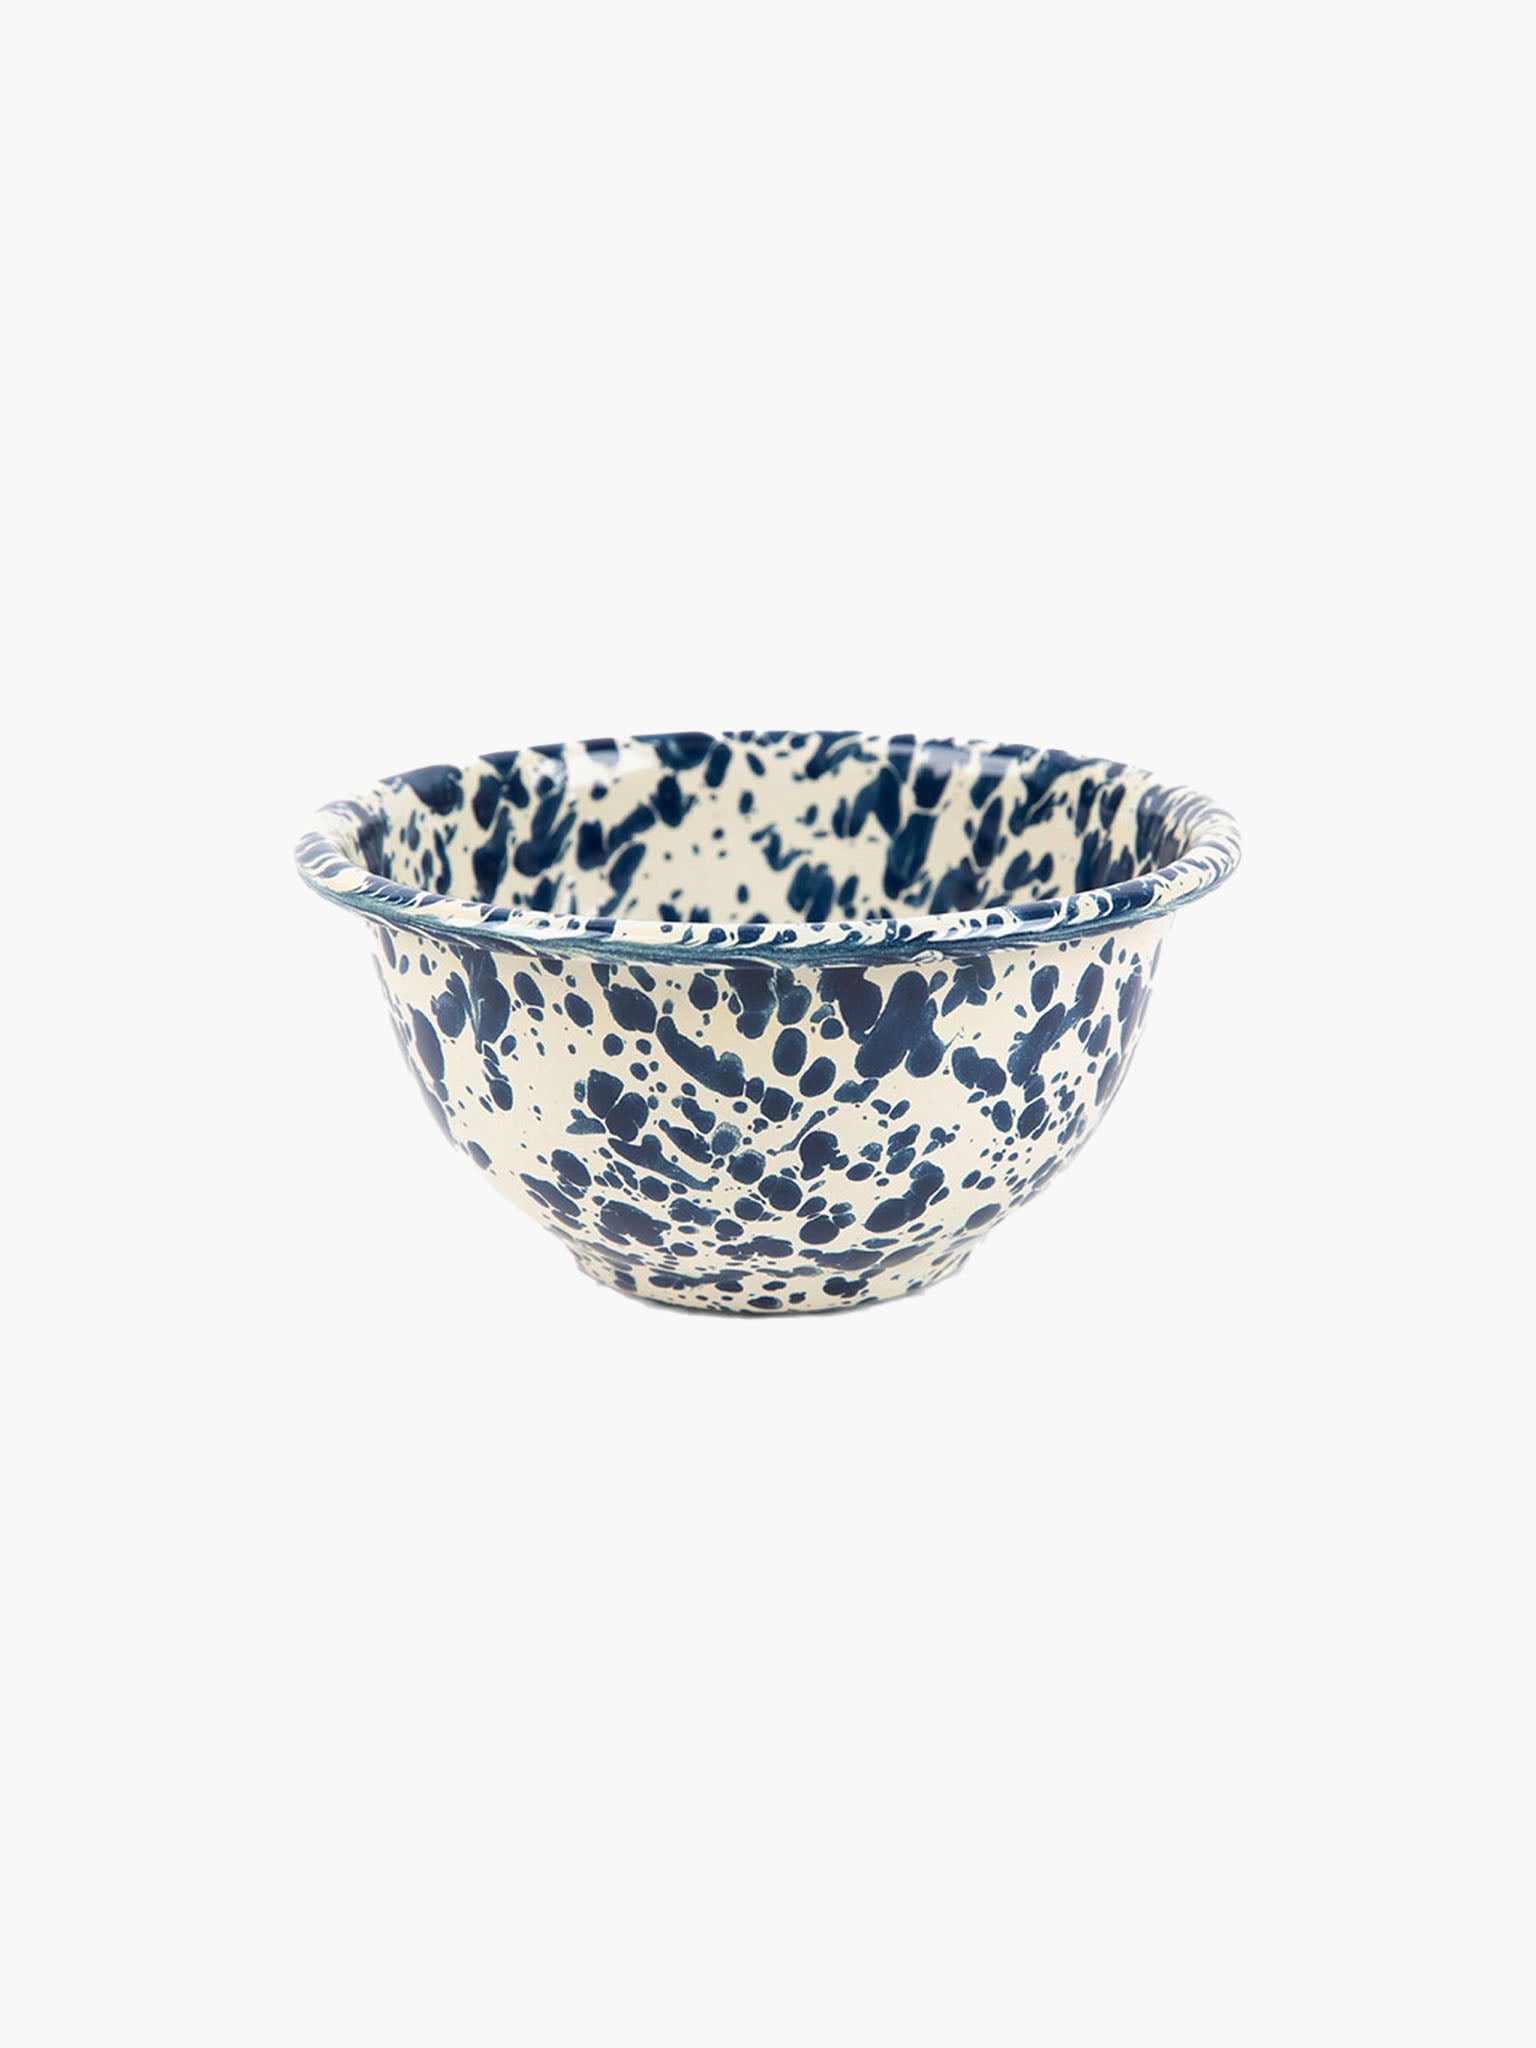 Splatter Small Footed Bowl (13cm) - Navy & Cream